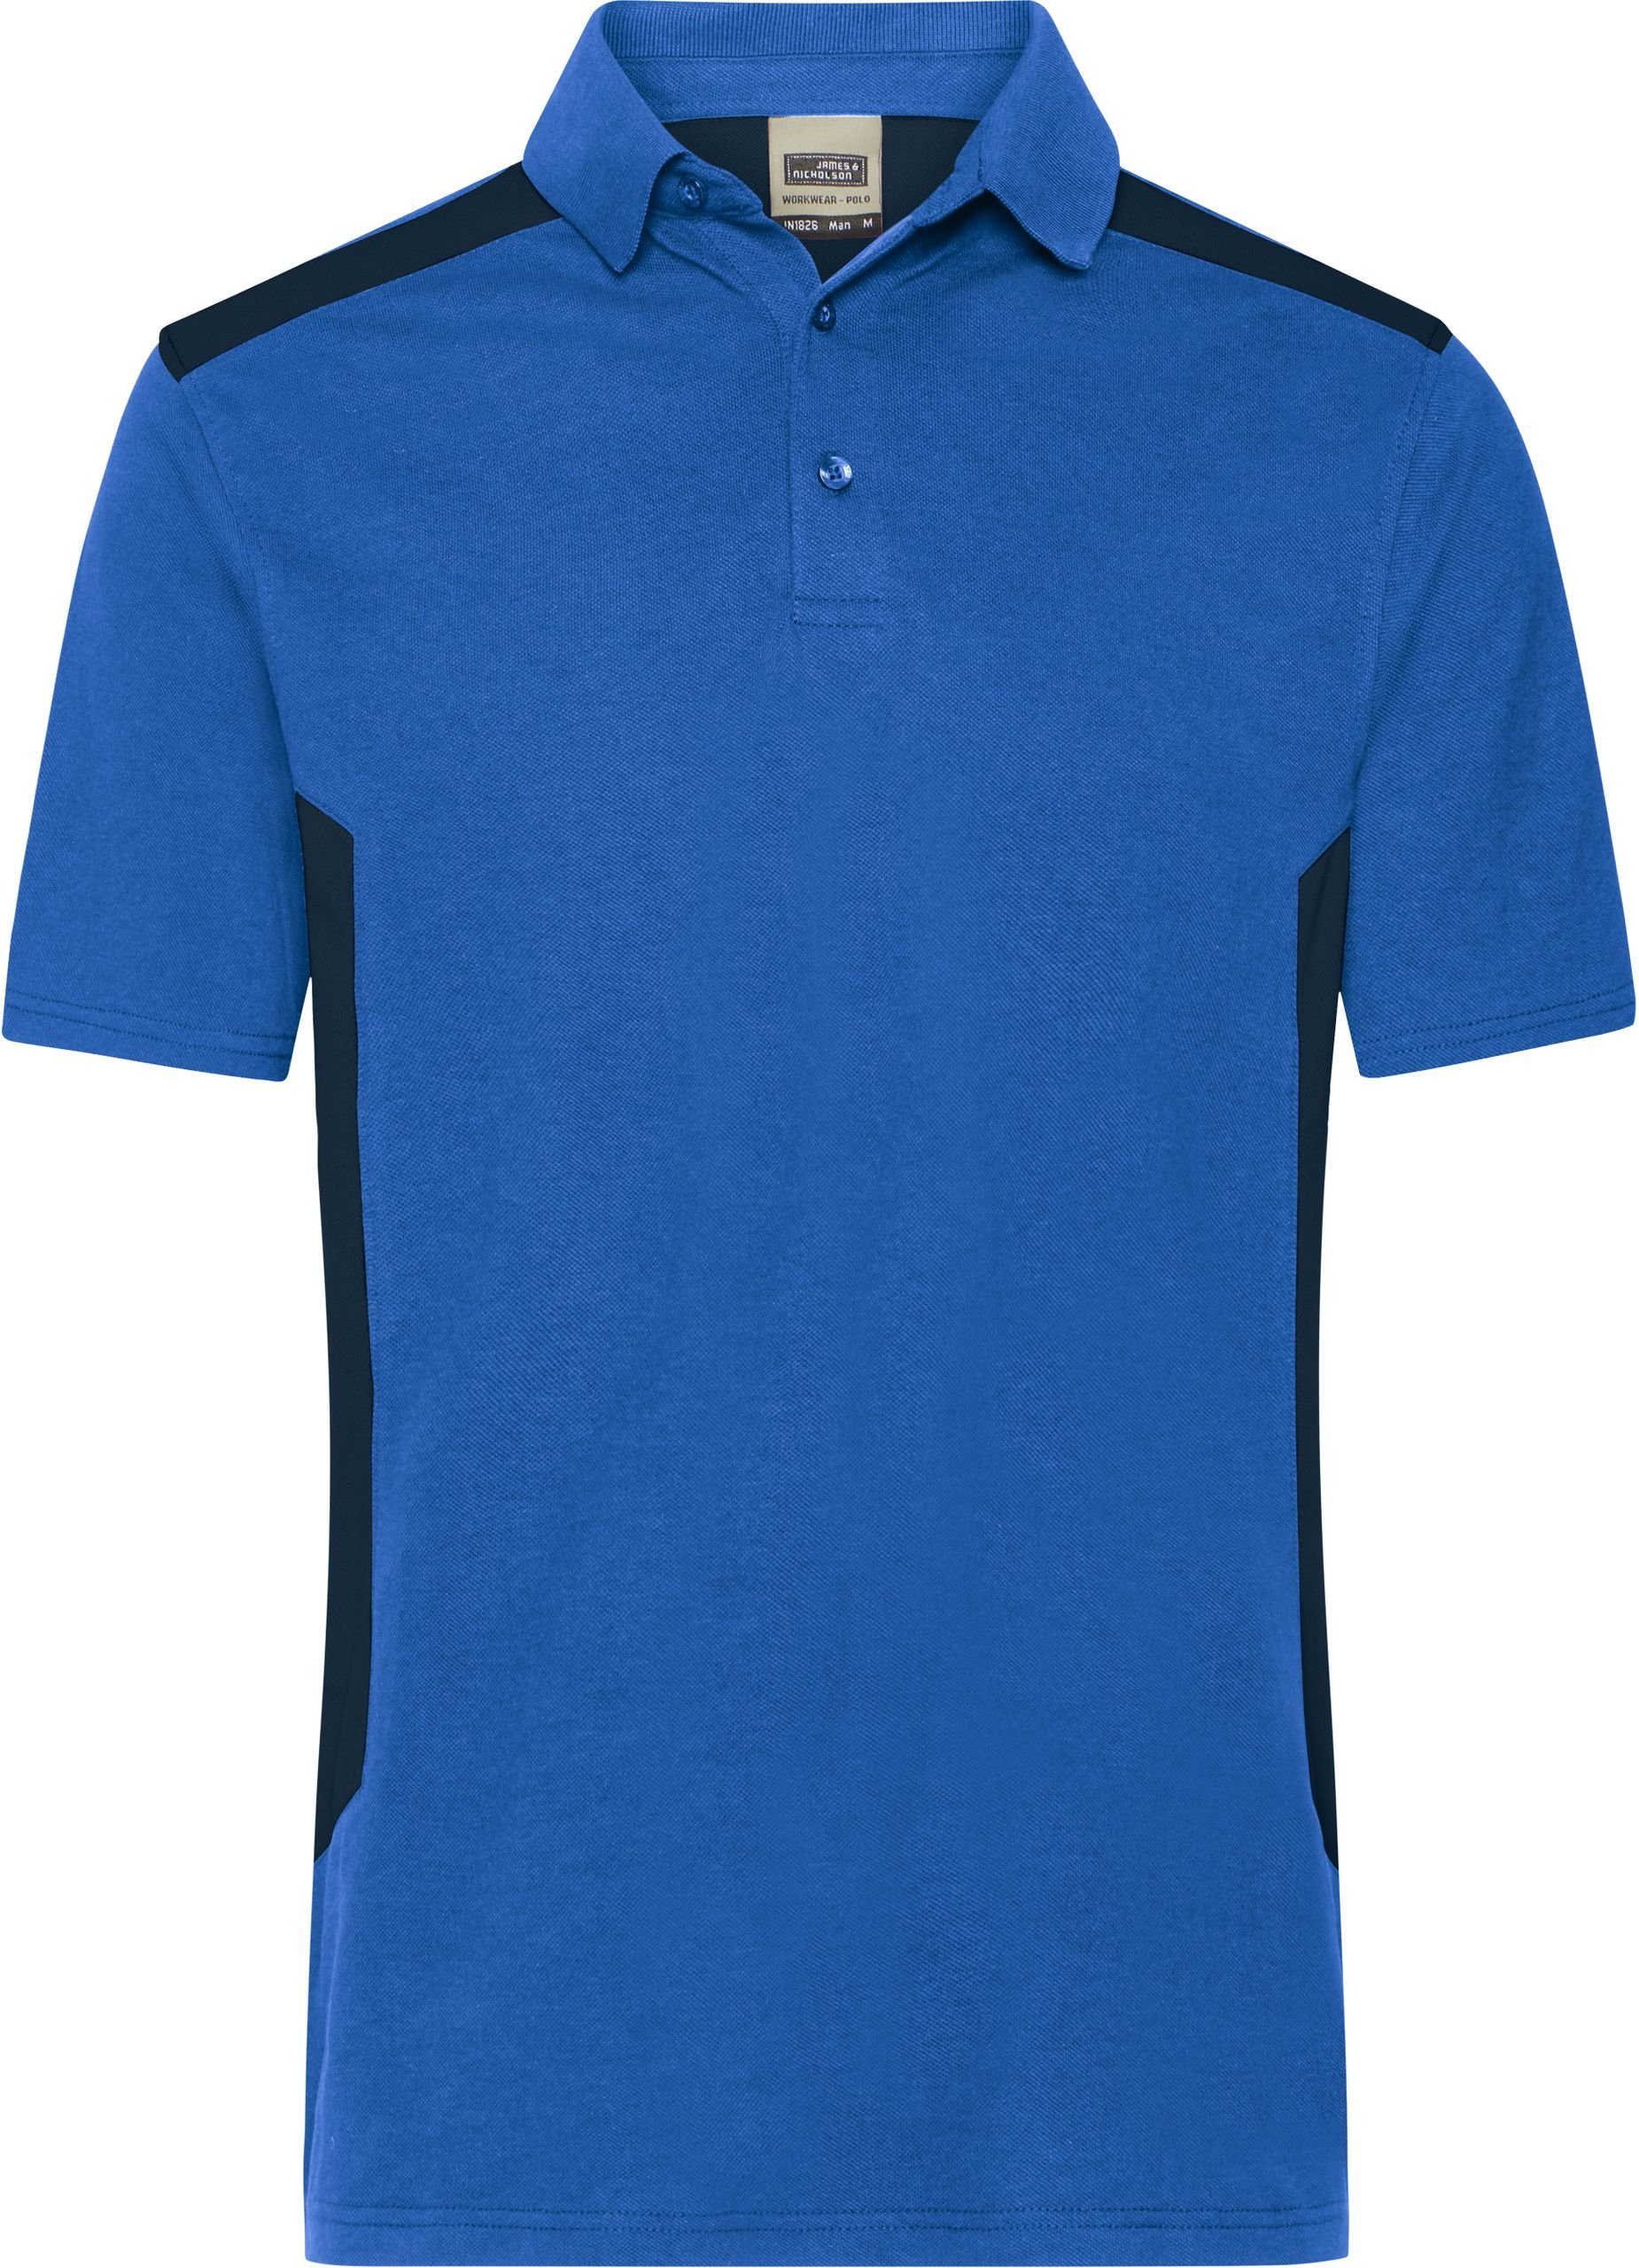 Herren & Nicholson Poloshirt Polo James Strong - Workwear royal/navy